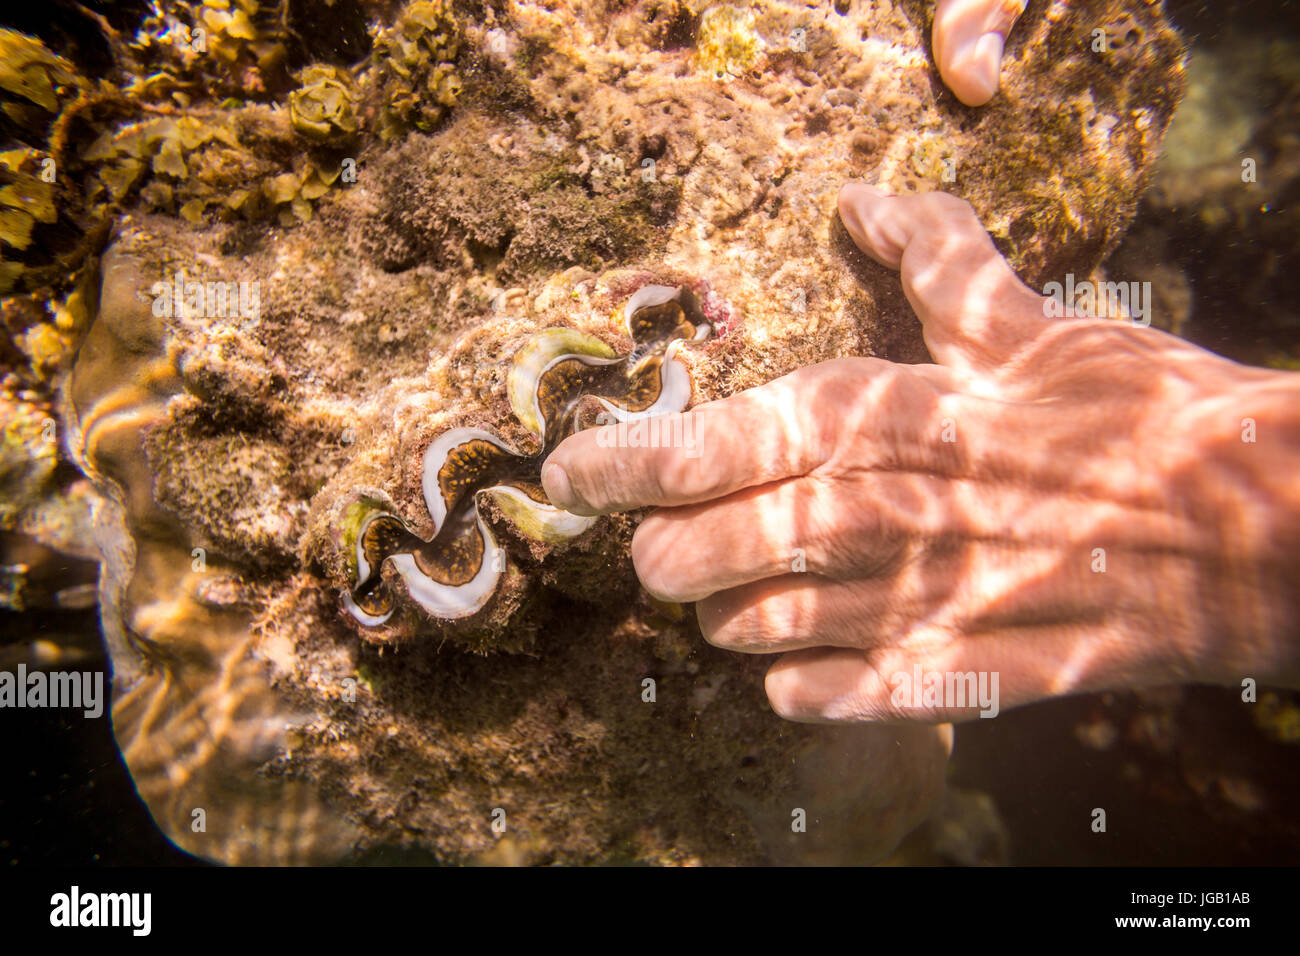 Touristischen berühren Unterwasser Muschel Molluske, Kenia, Ostafrika Stockfoto